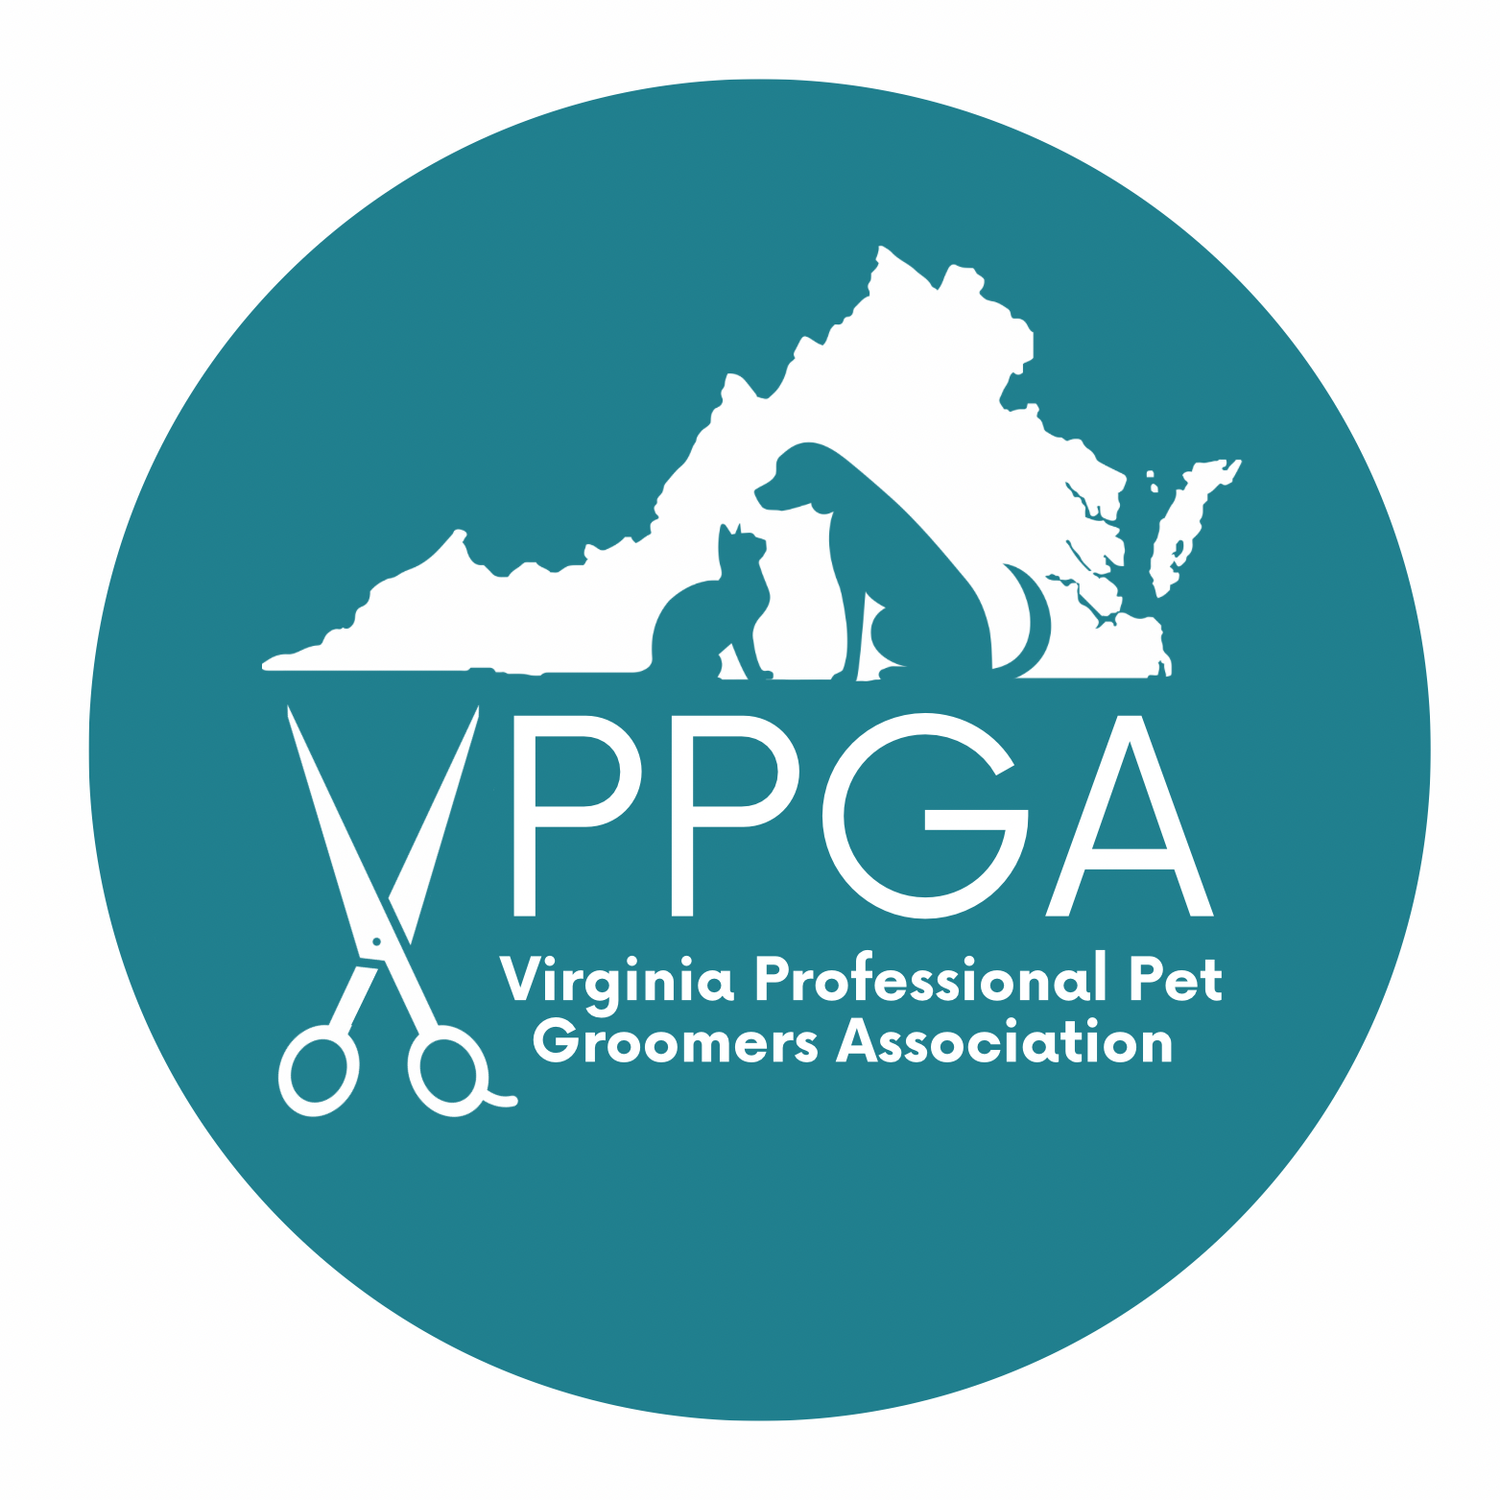 Virginia Professional Pet Groomers Association